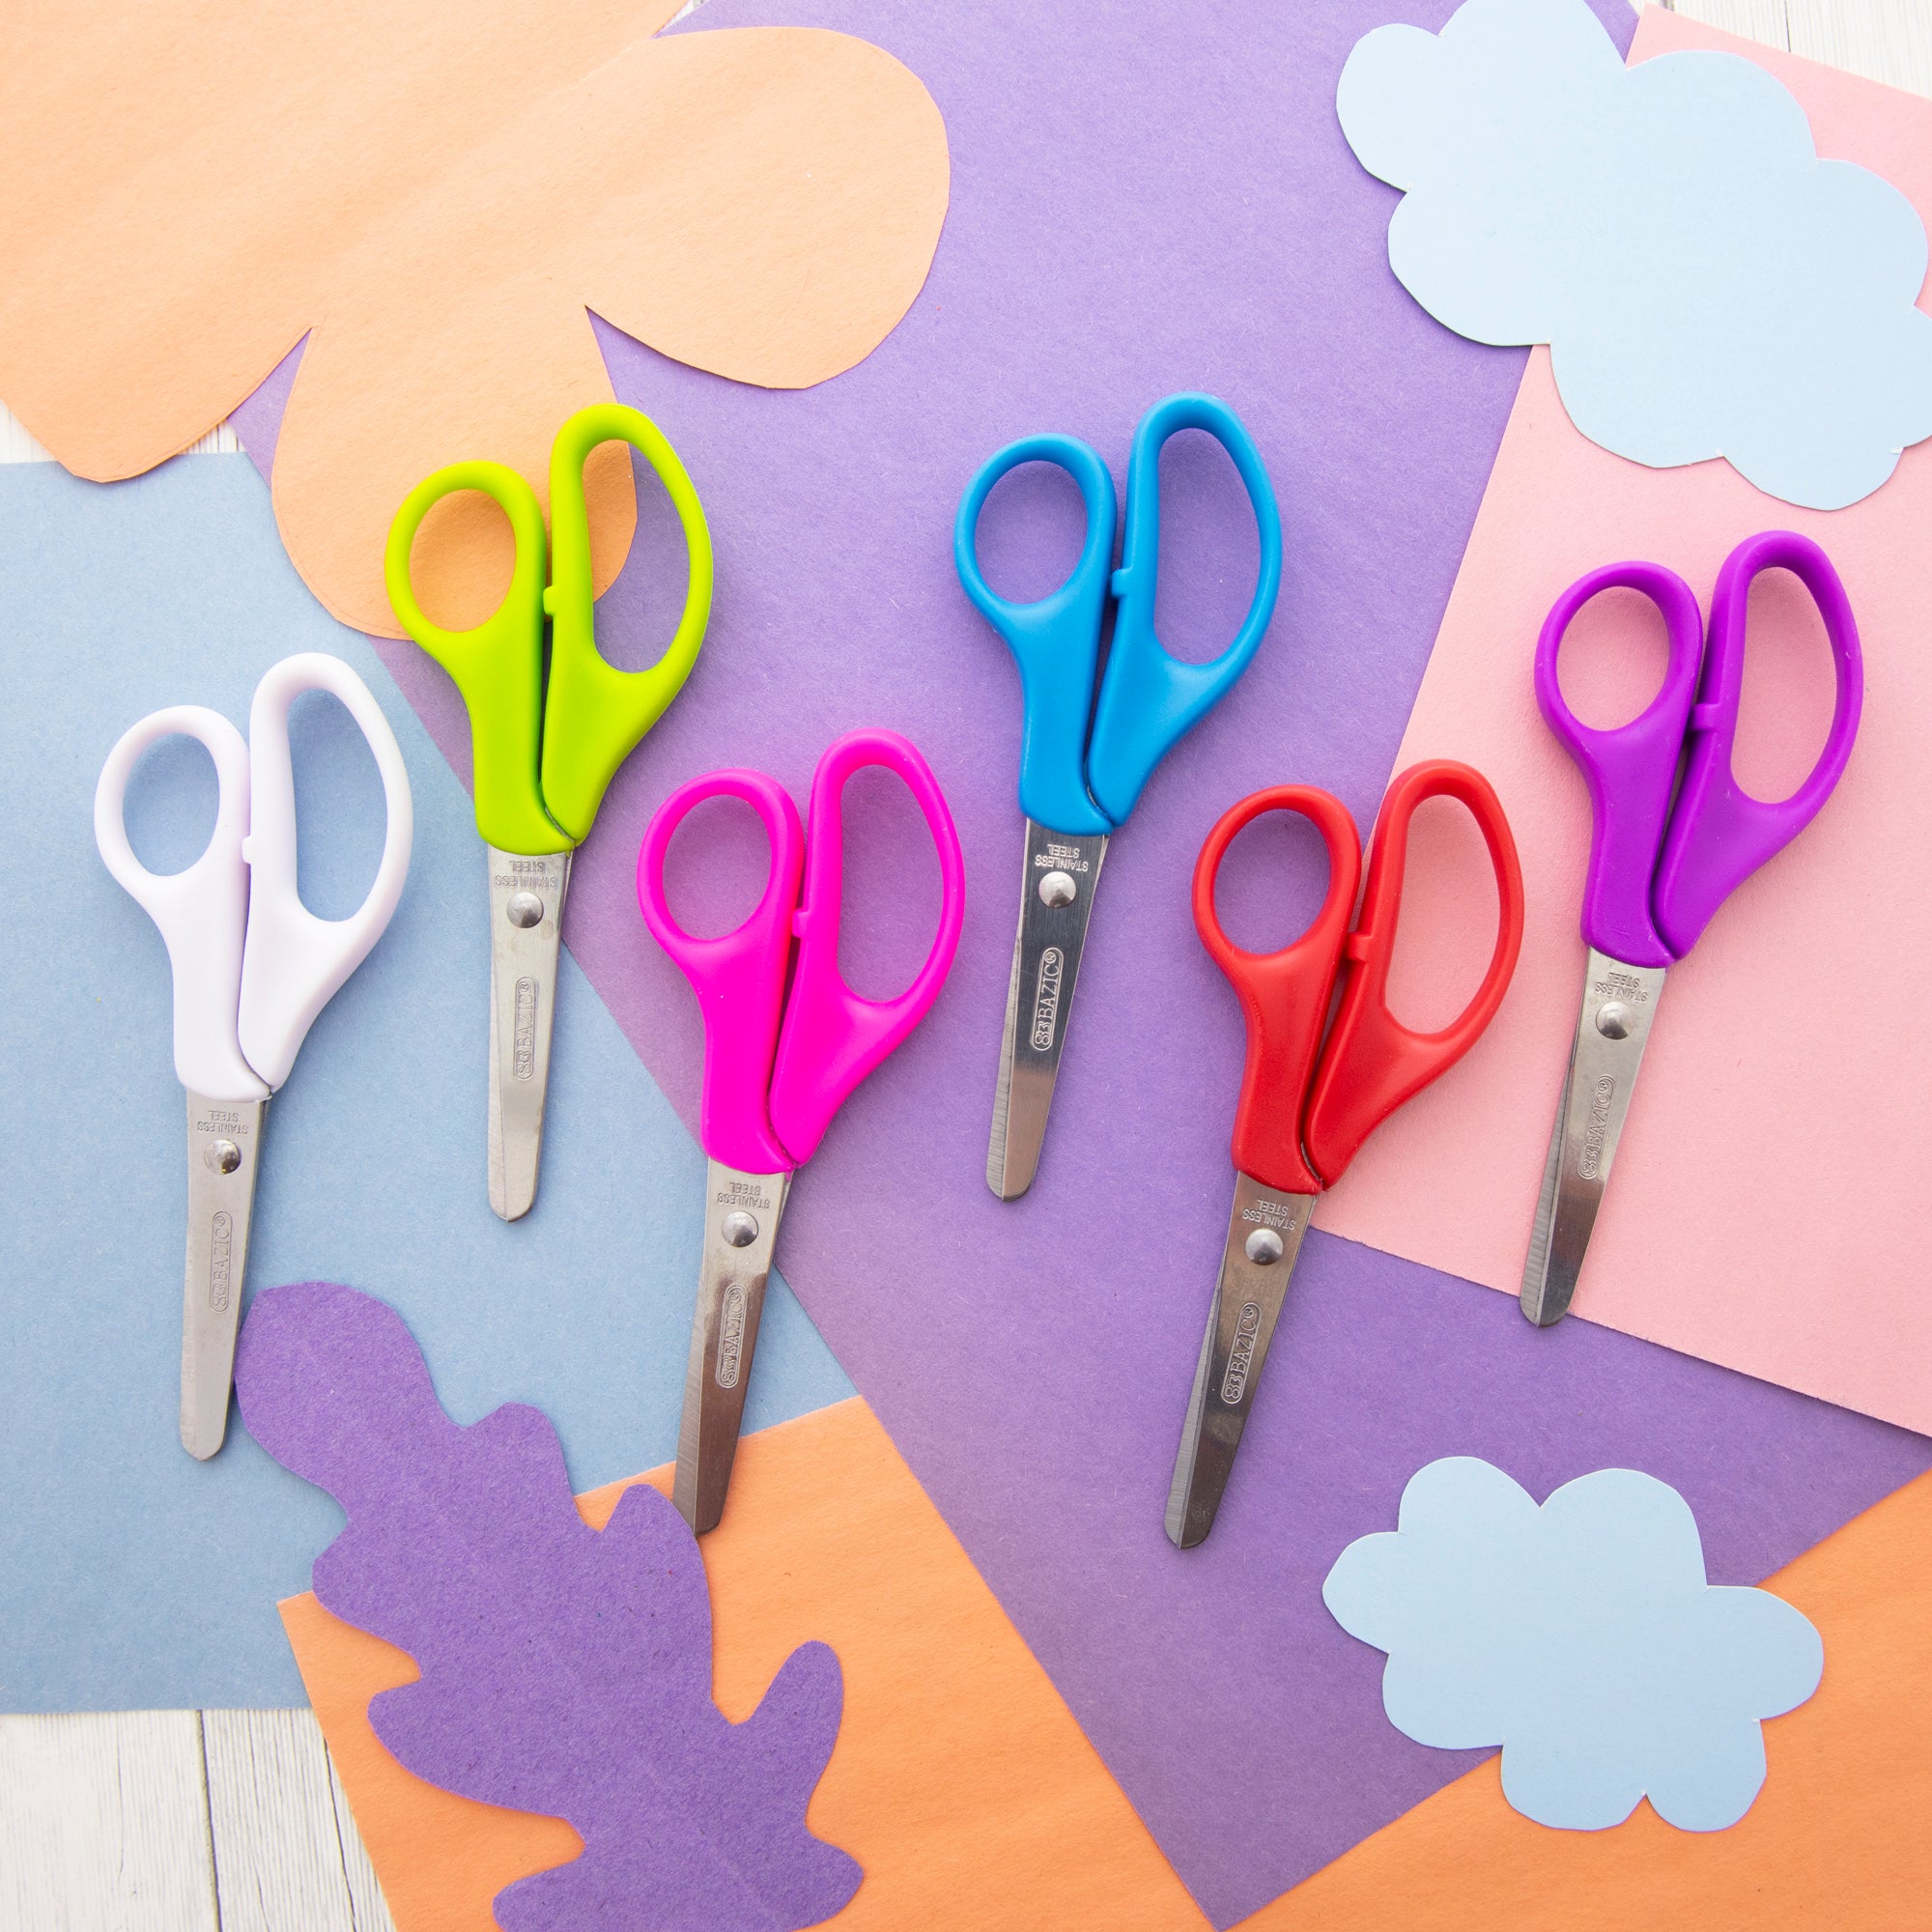 Classroom Scissors Round Tip, 5 Inches [24 PACK]